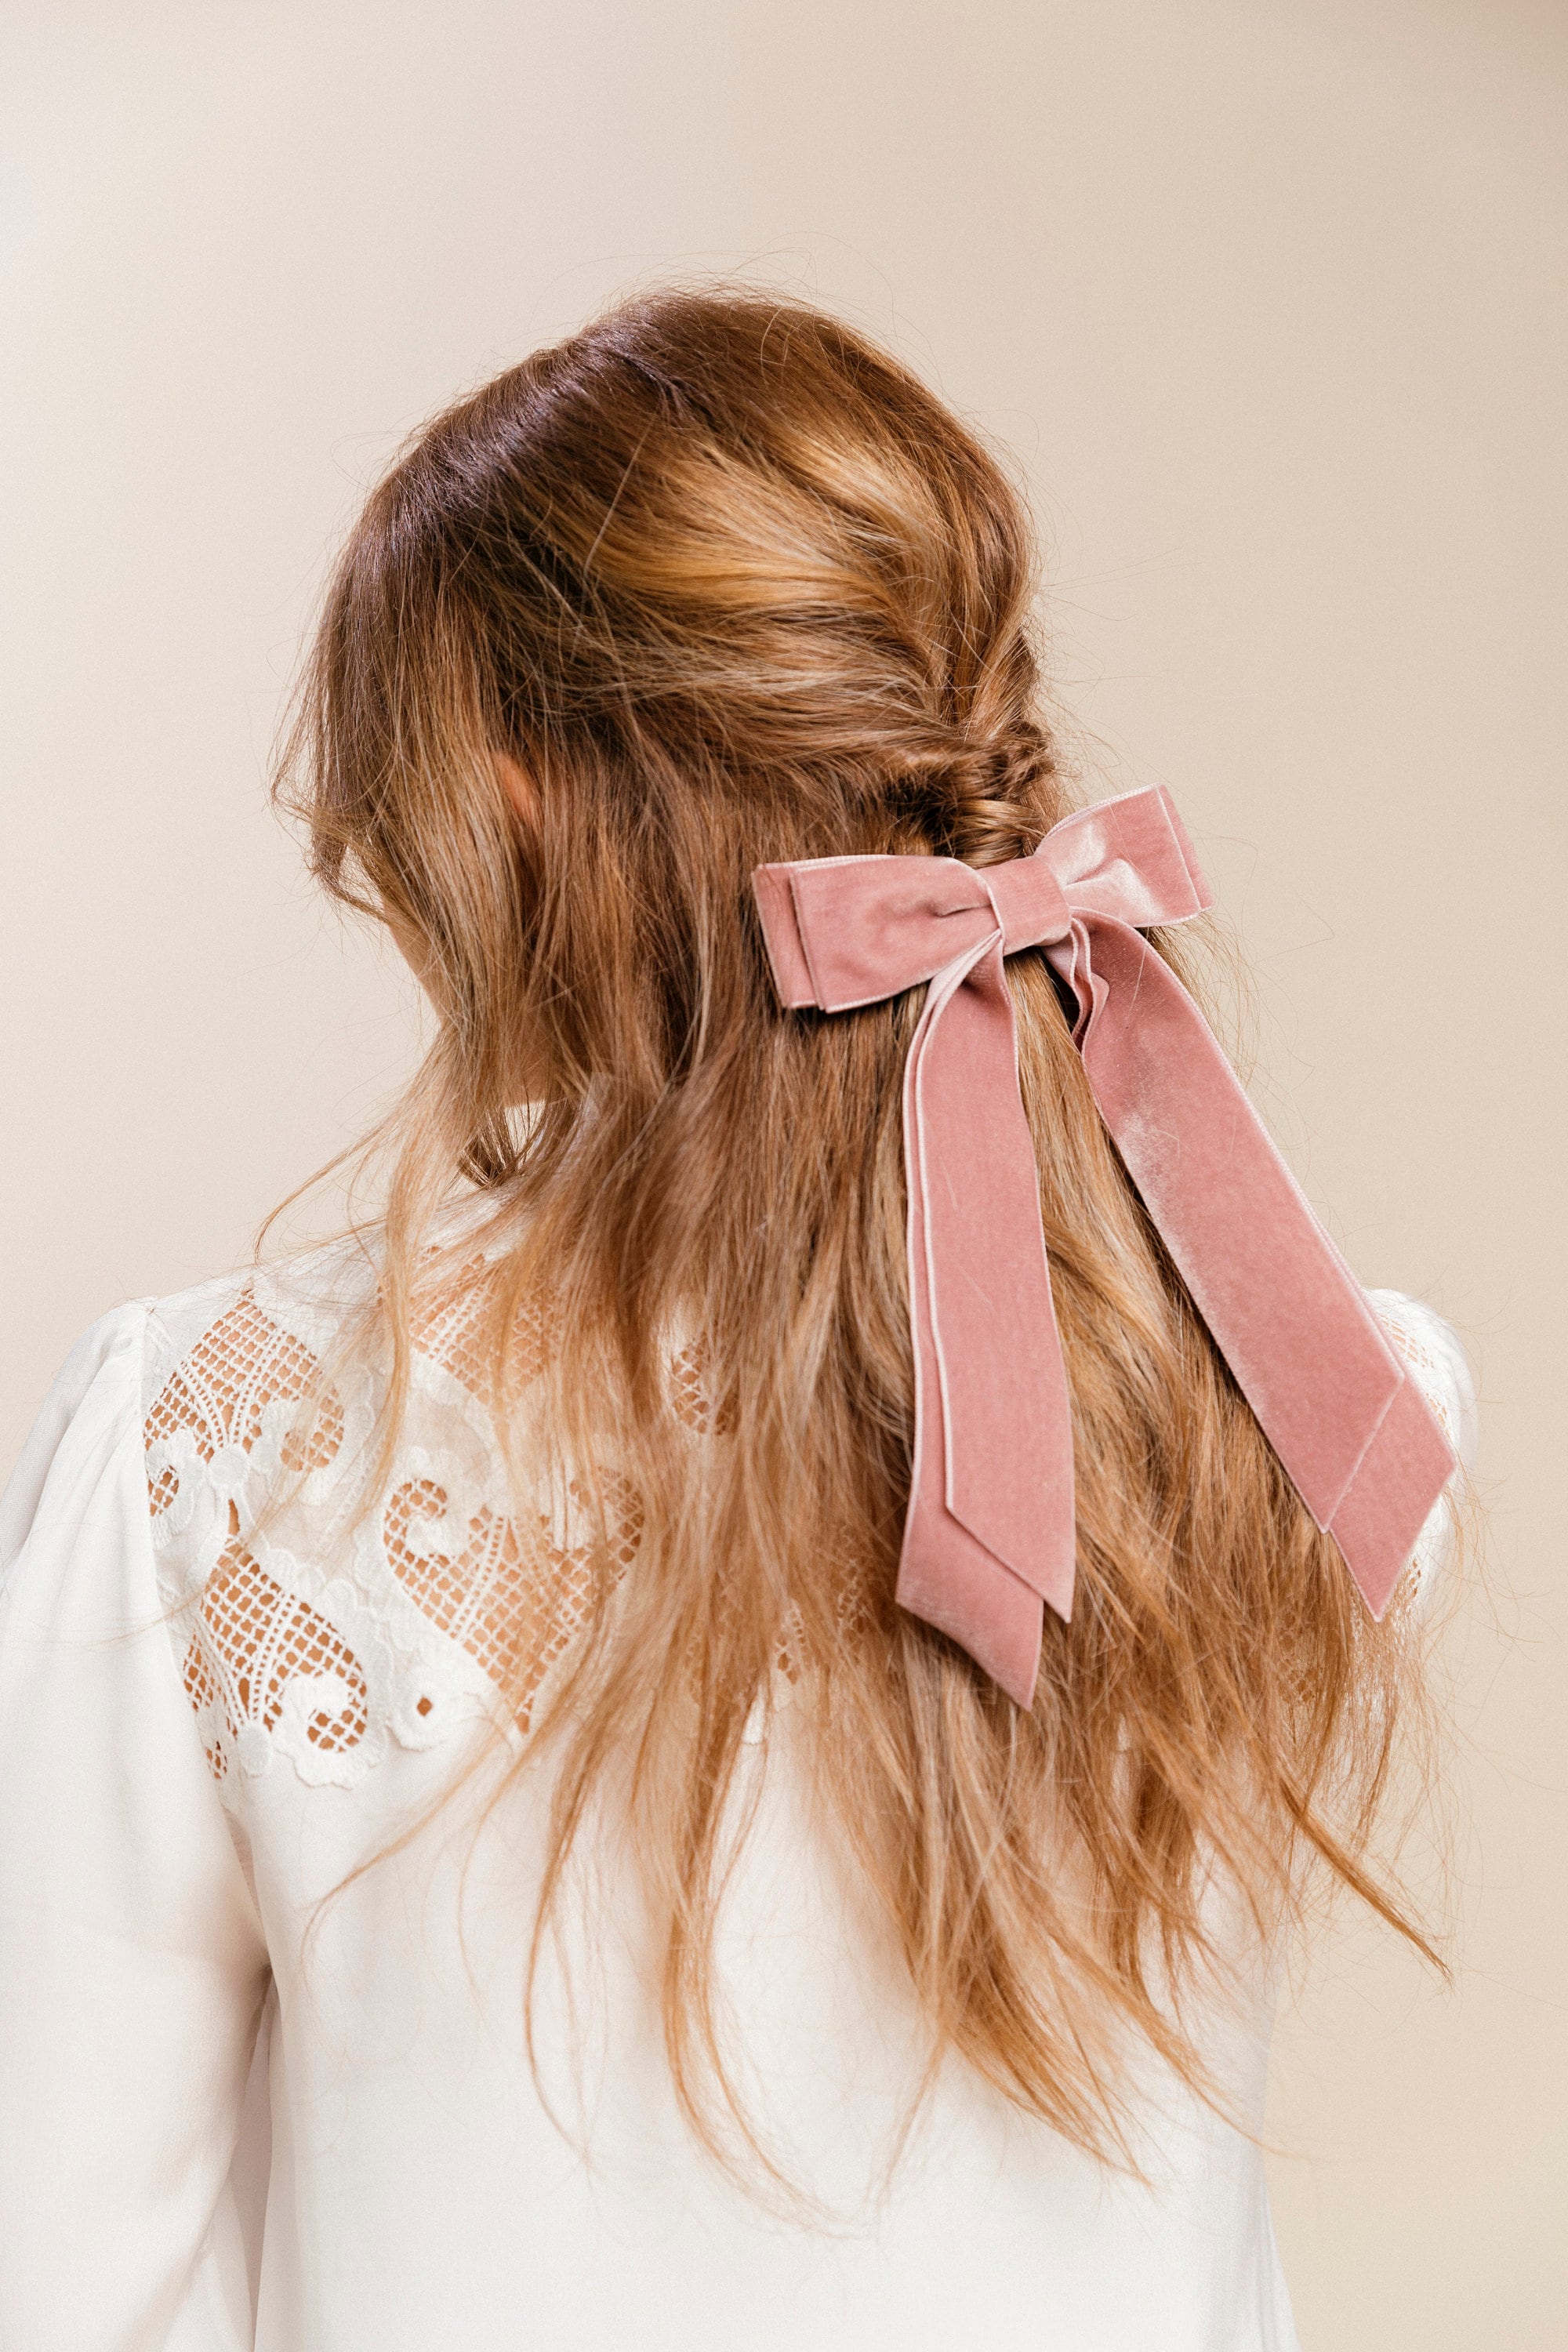 hair ribbons amateur law sister